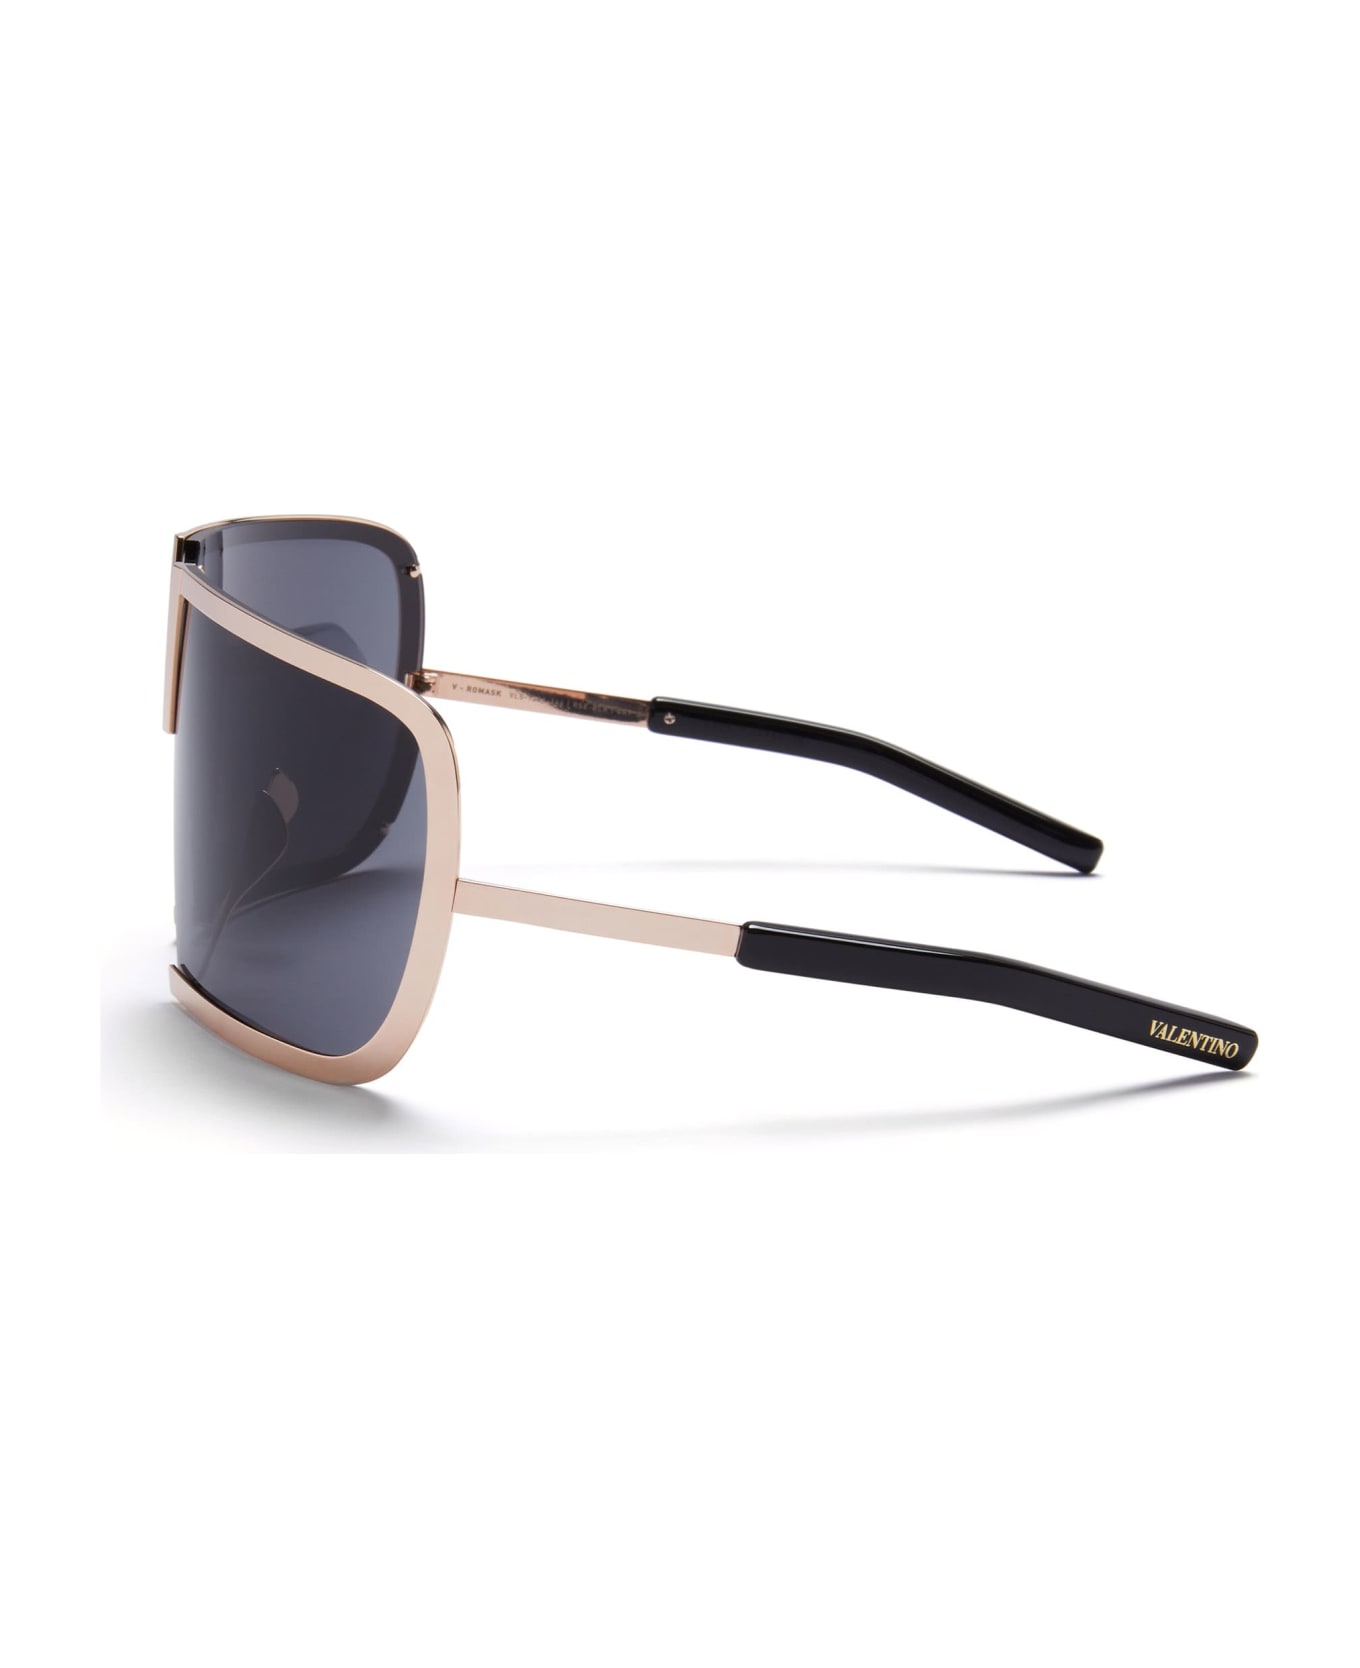 Valentino Eyewear Romask - Rose Gold / Black Sunglasses - Black/rose gold